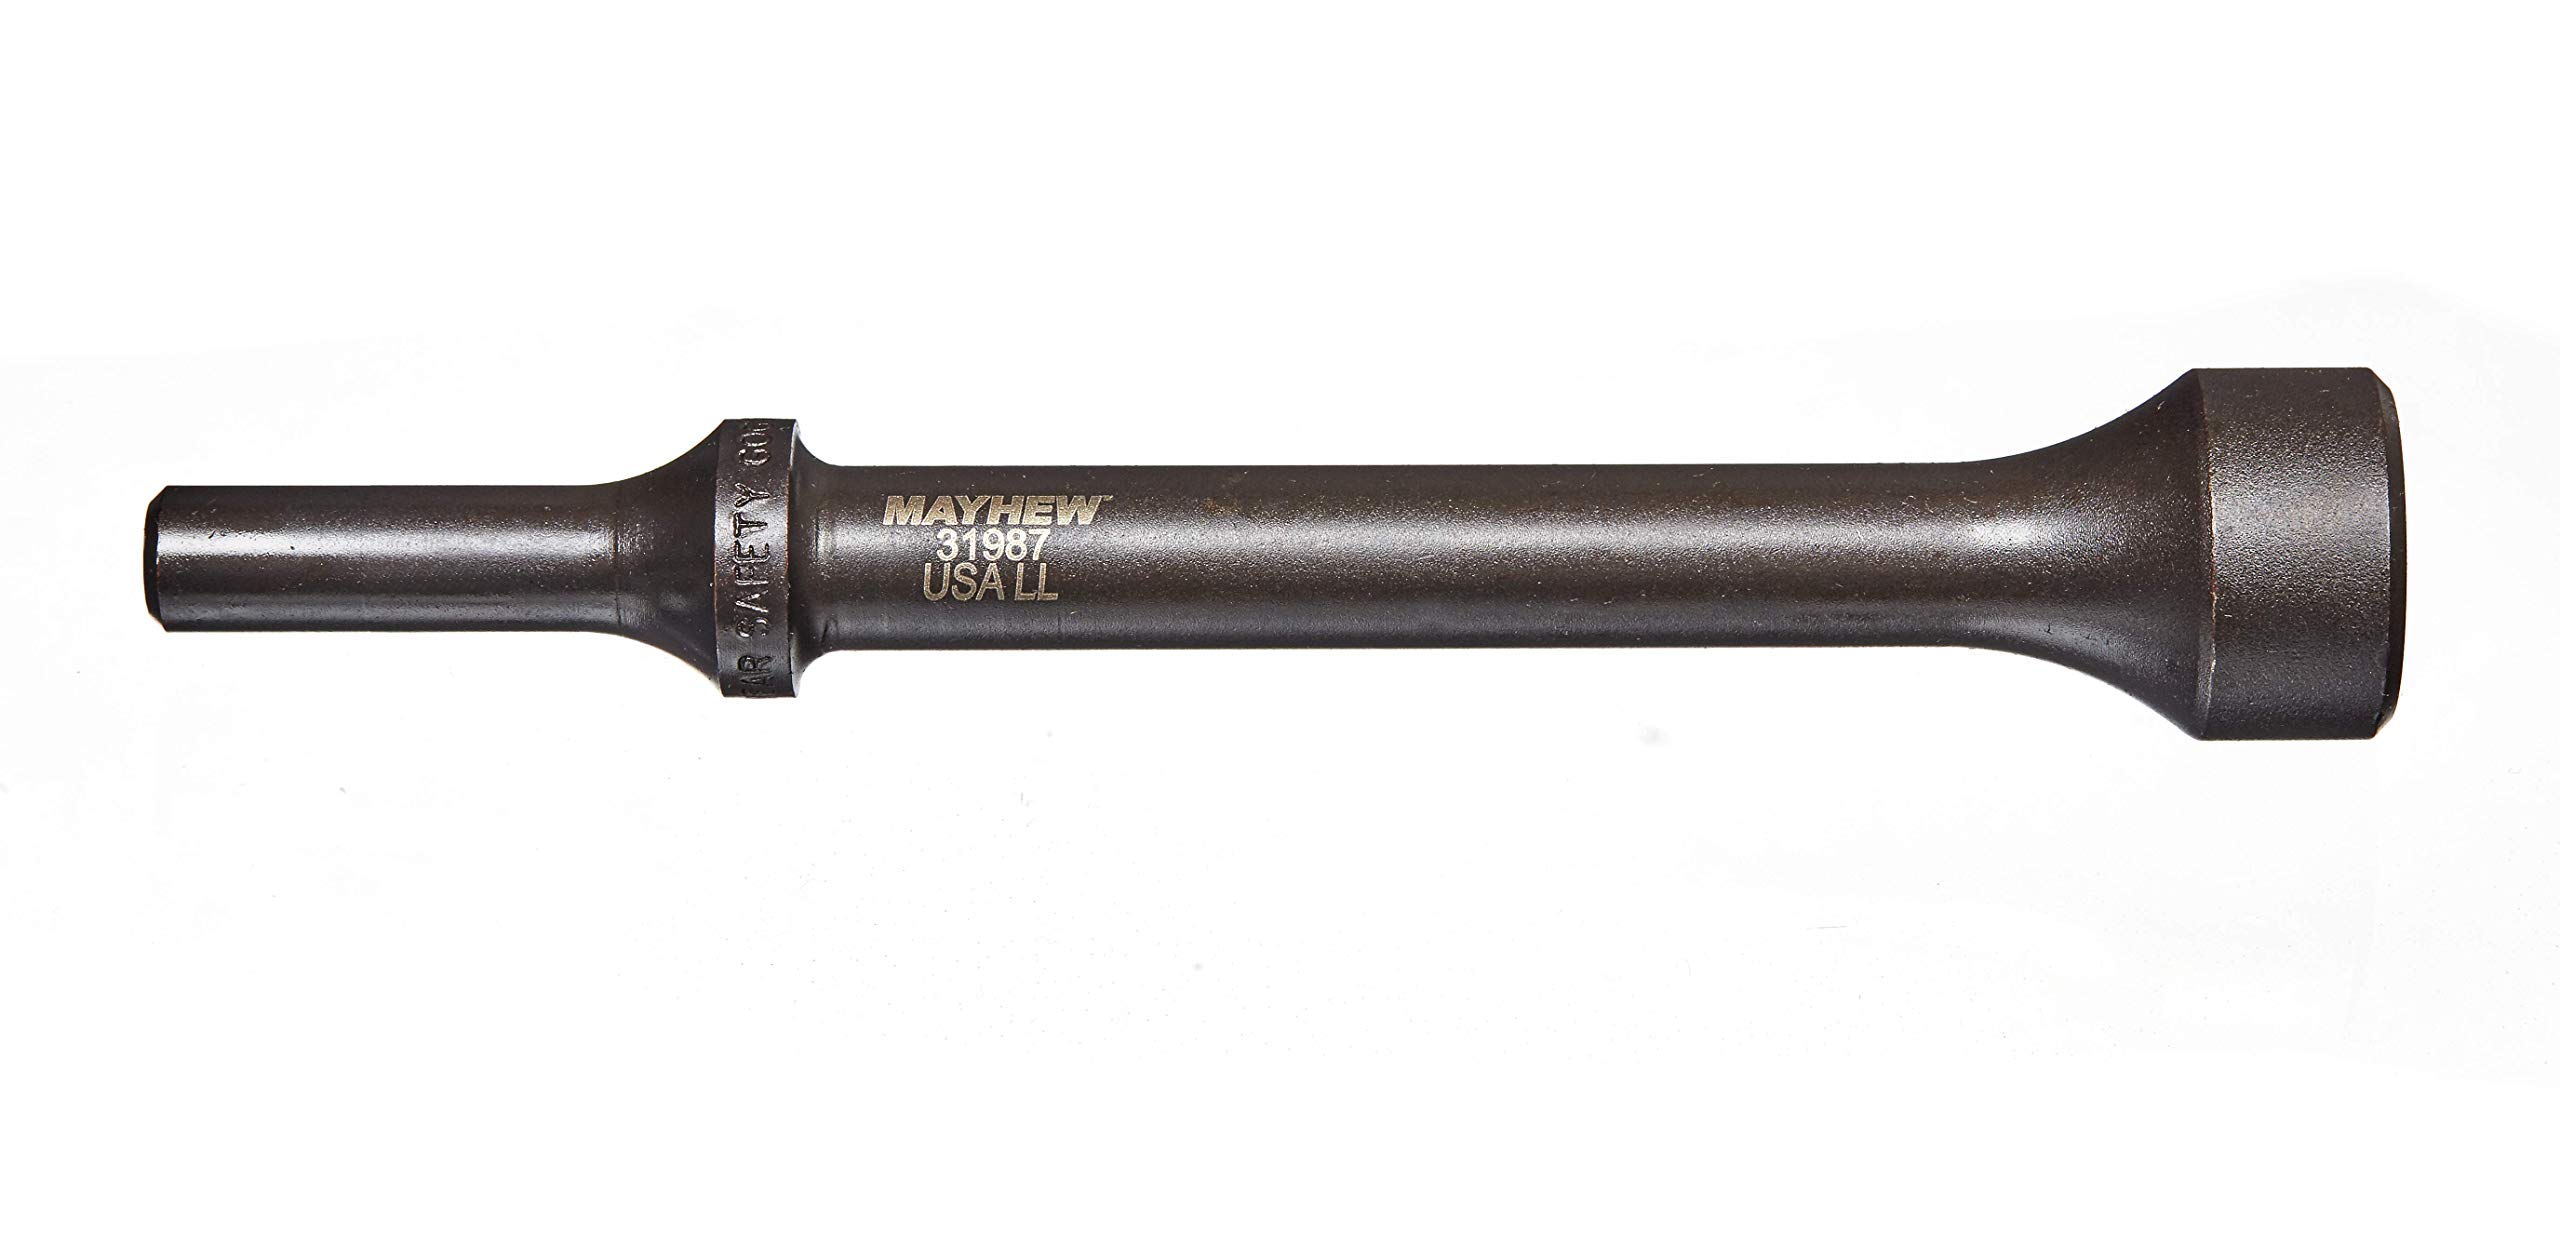 Mayhew Pro 31987 6-Inch Pneumatic Hammer